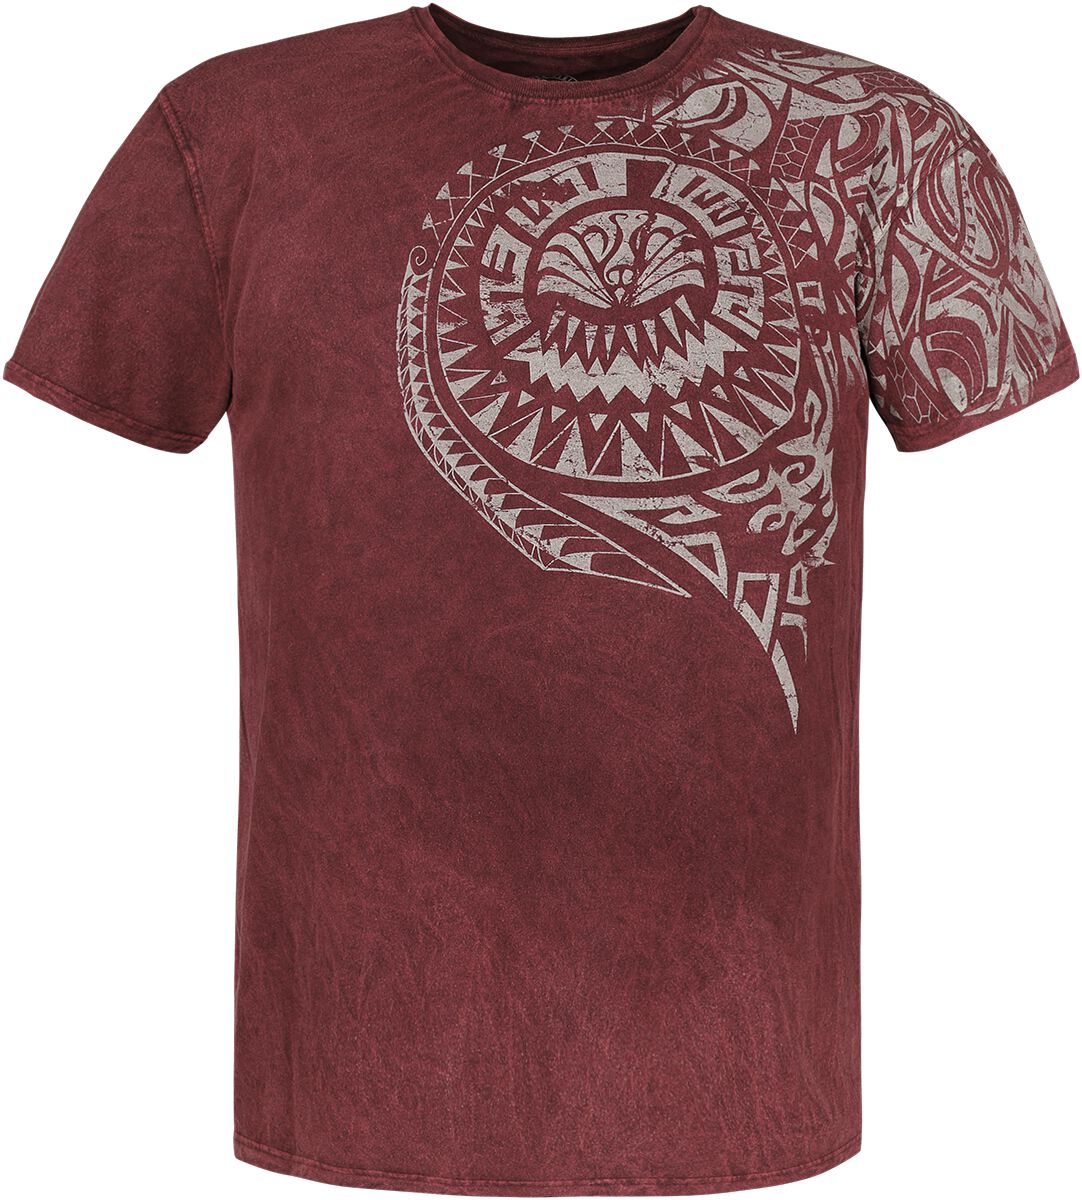 Outer Vision T-Shirt - Burned Tattoo - S bis 4XL - für Männer - Größe S - rot